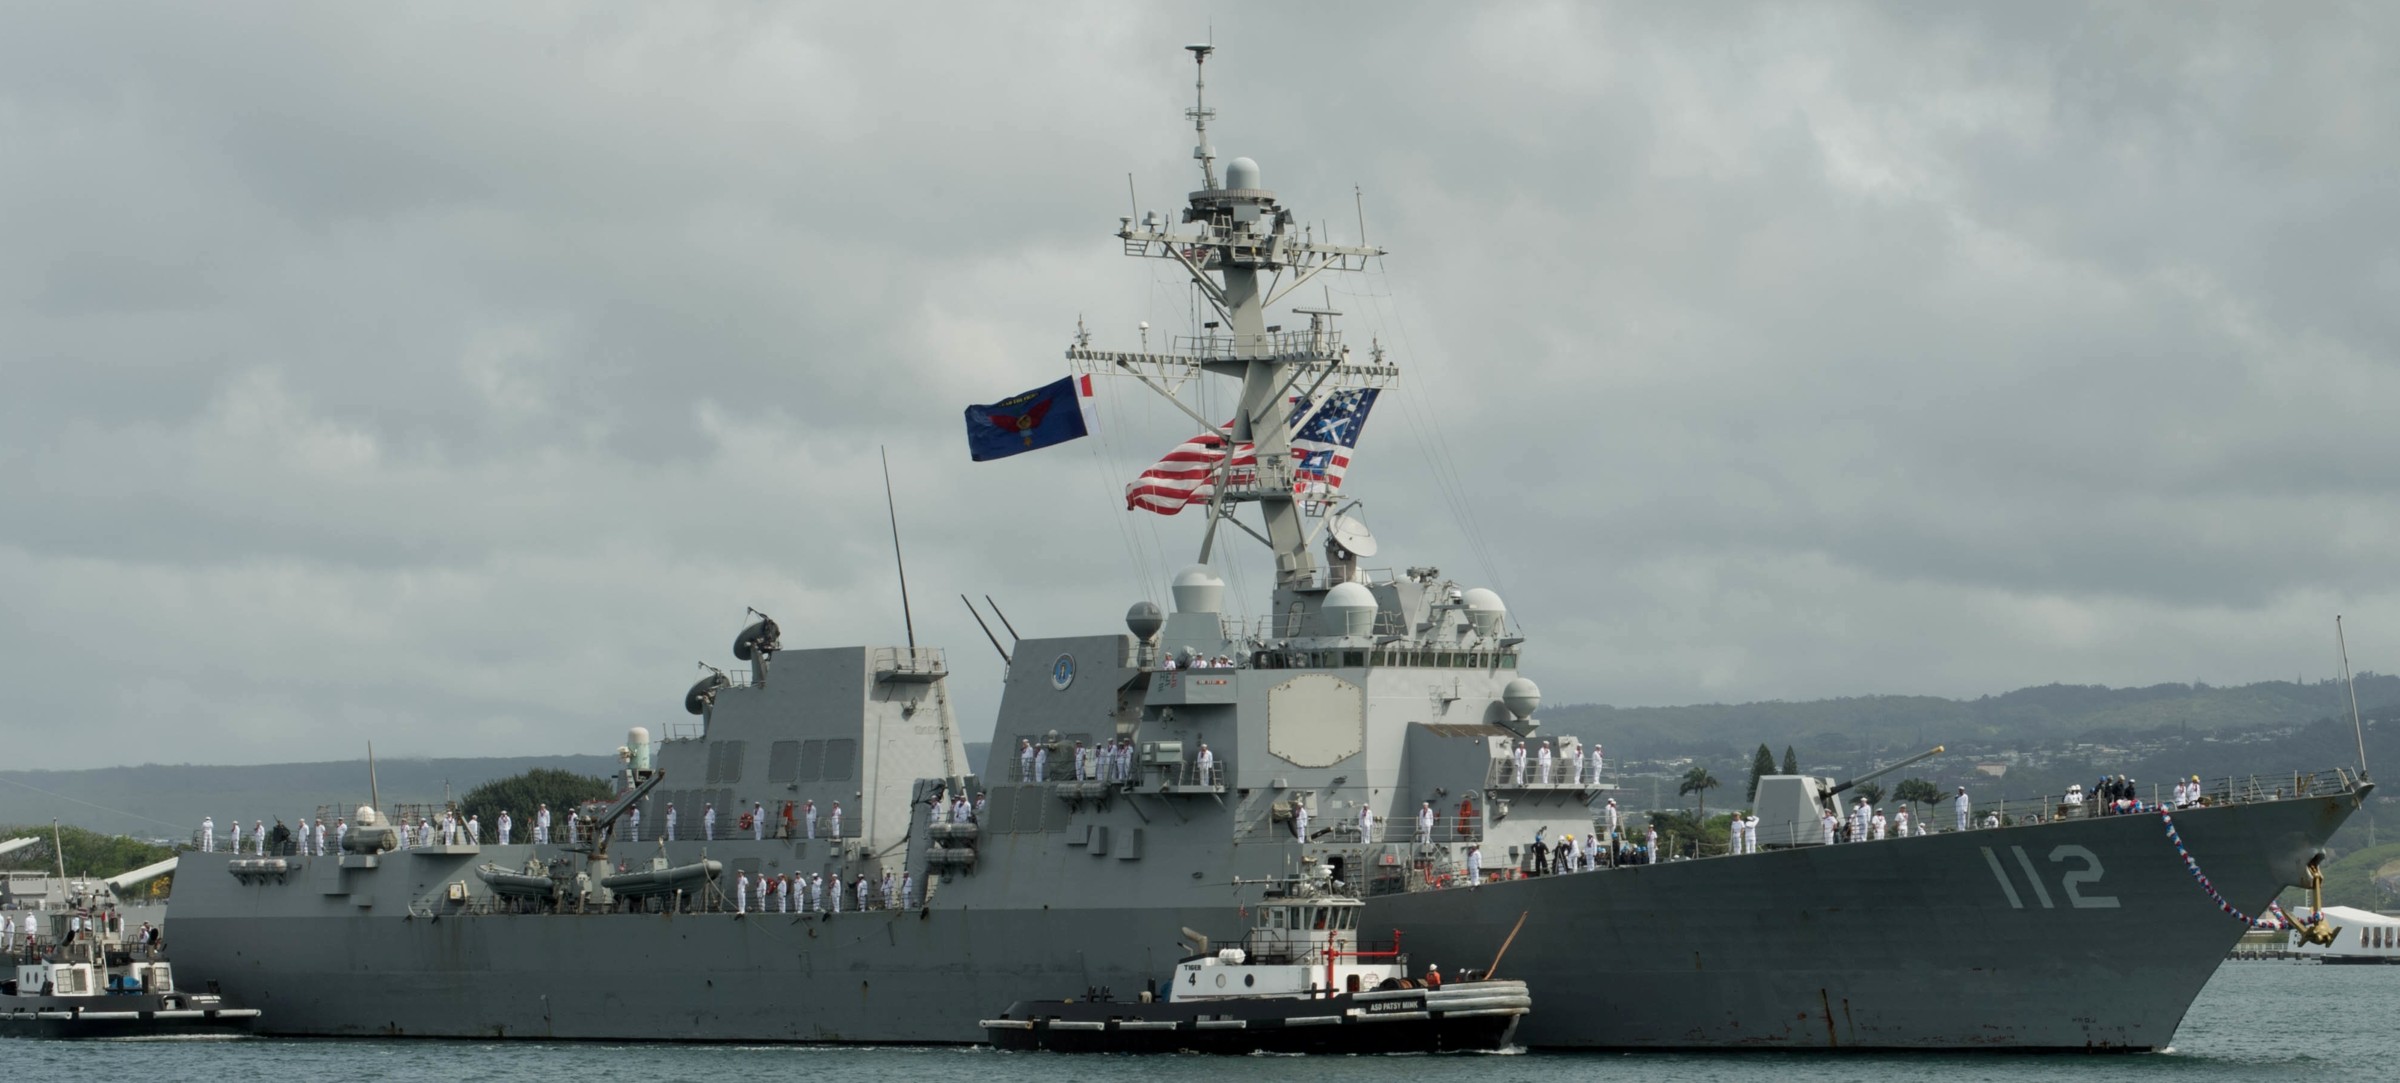 ddg-112 uss michael murphy arleigh burke class guided missile destroyer aegis us navy pearl harbor hawaii 45